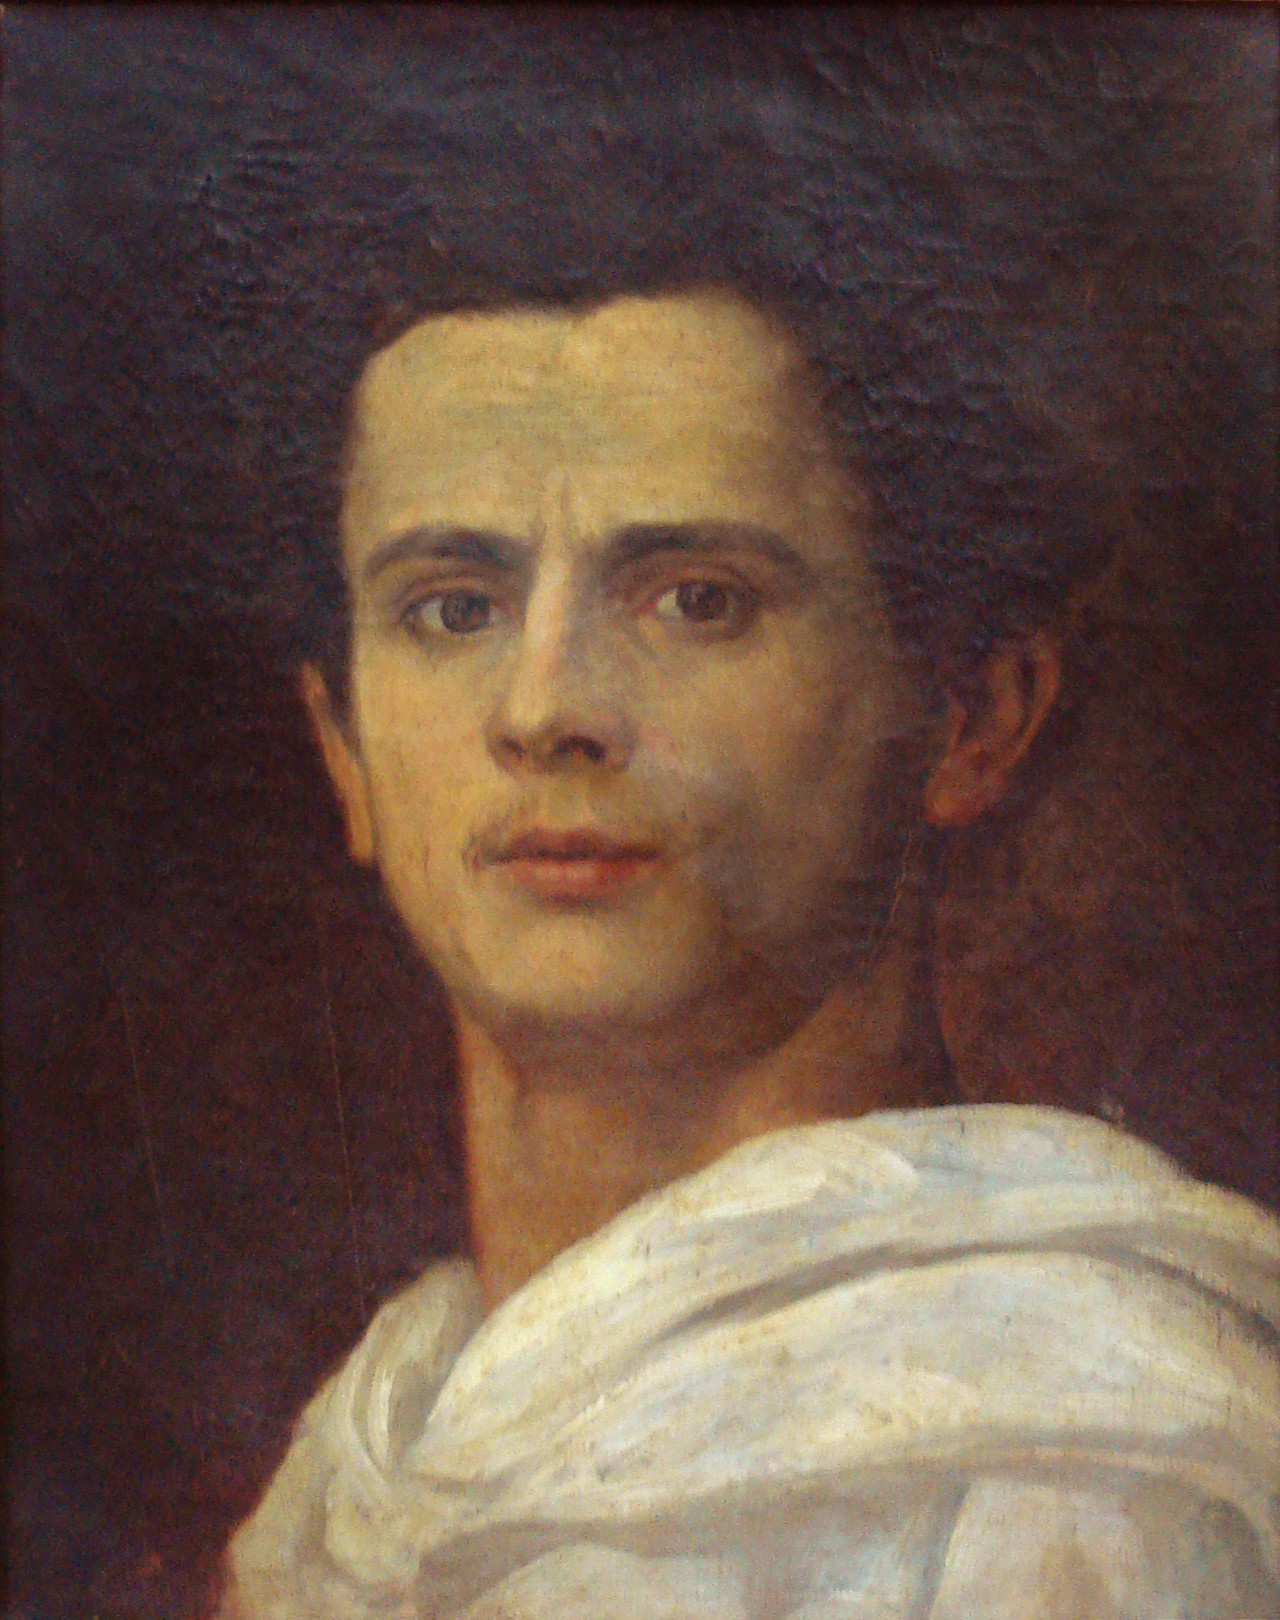 Jose Ferraz Almeida Júnior - 8 Maggio 1850 - 13 Novembre 1899